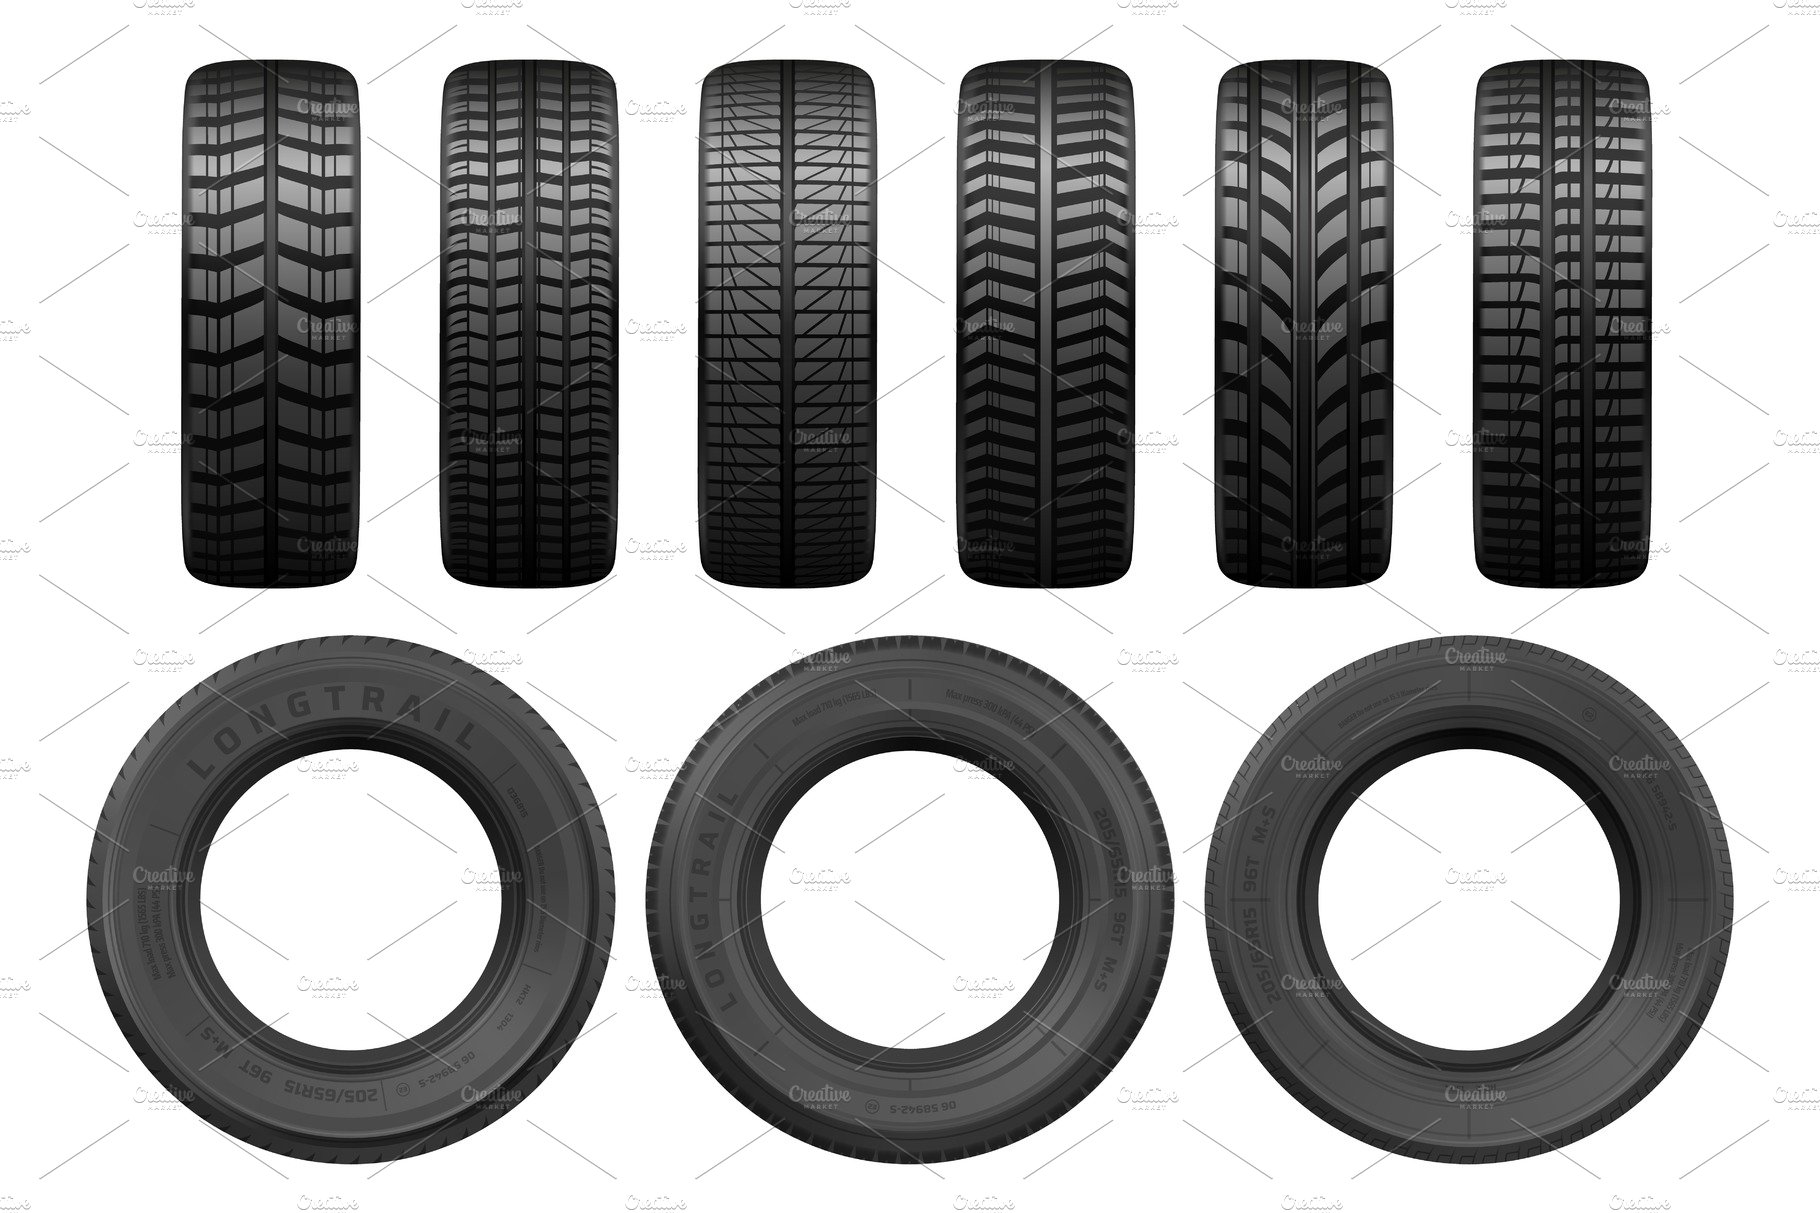 Car tires tread tracks, vector cover image.